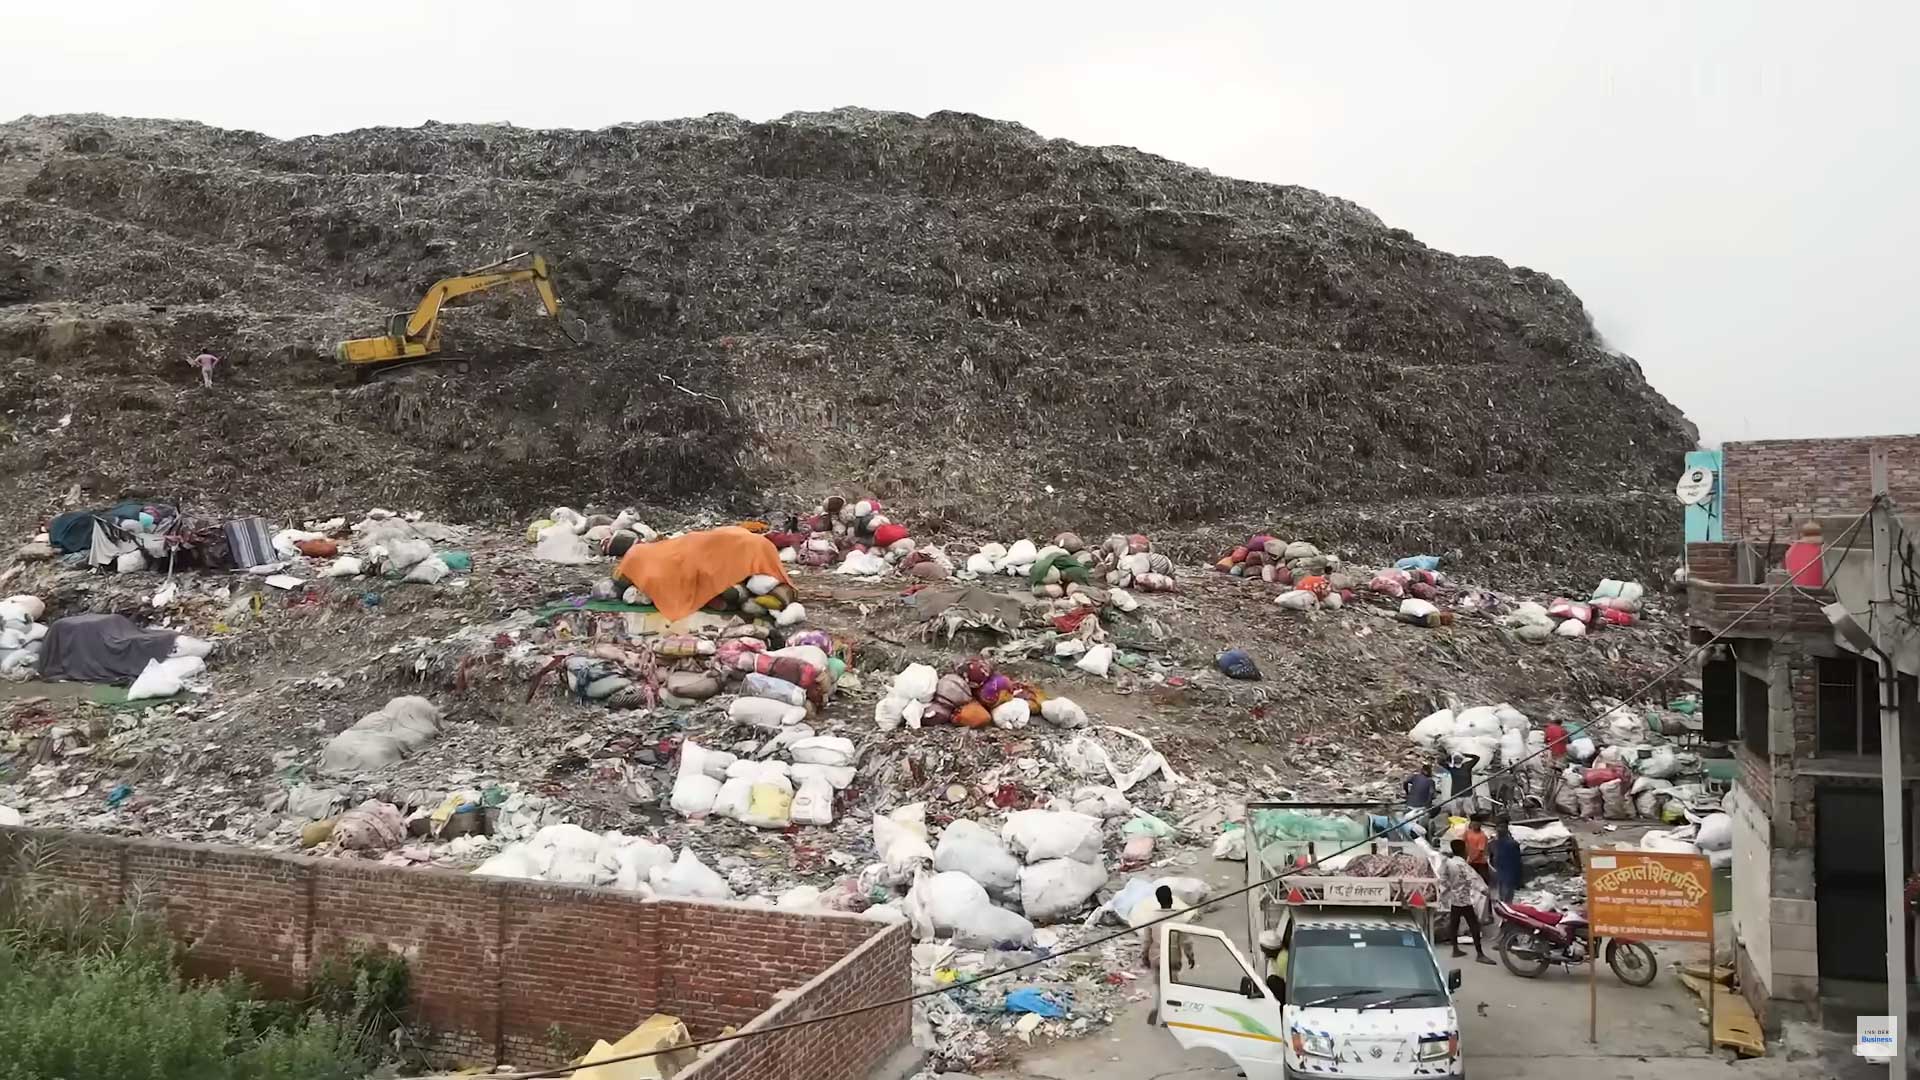 The Landfill Dilemma of Delhi